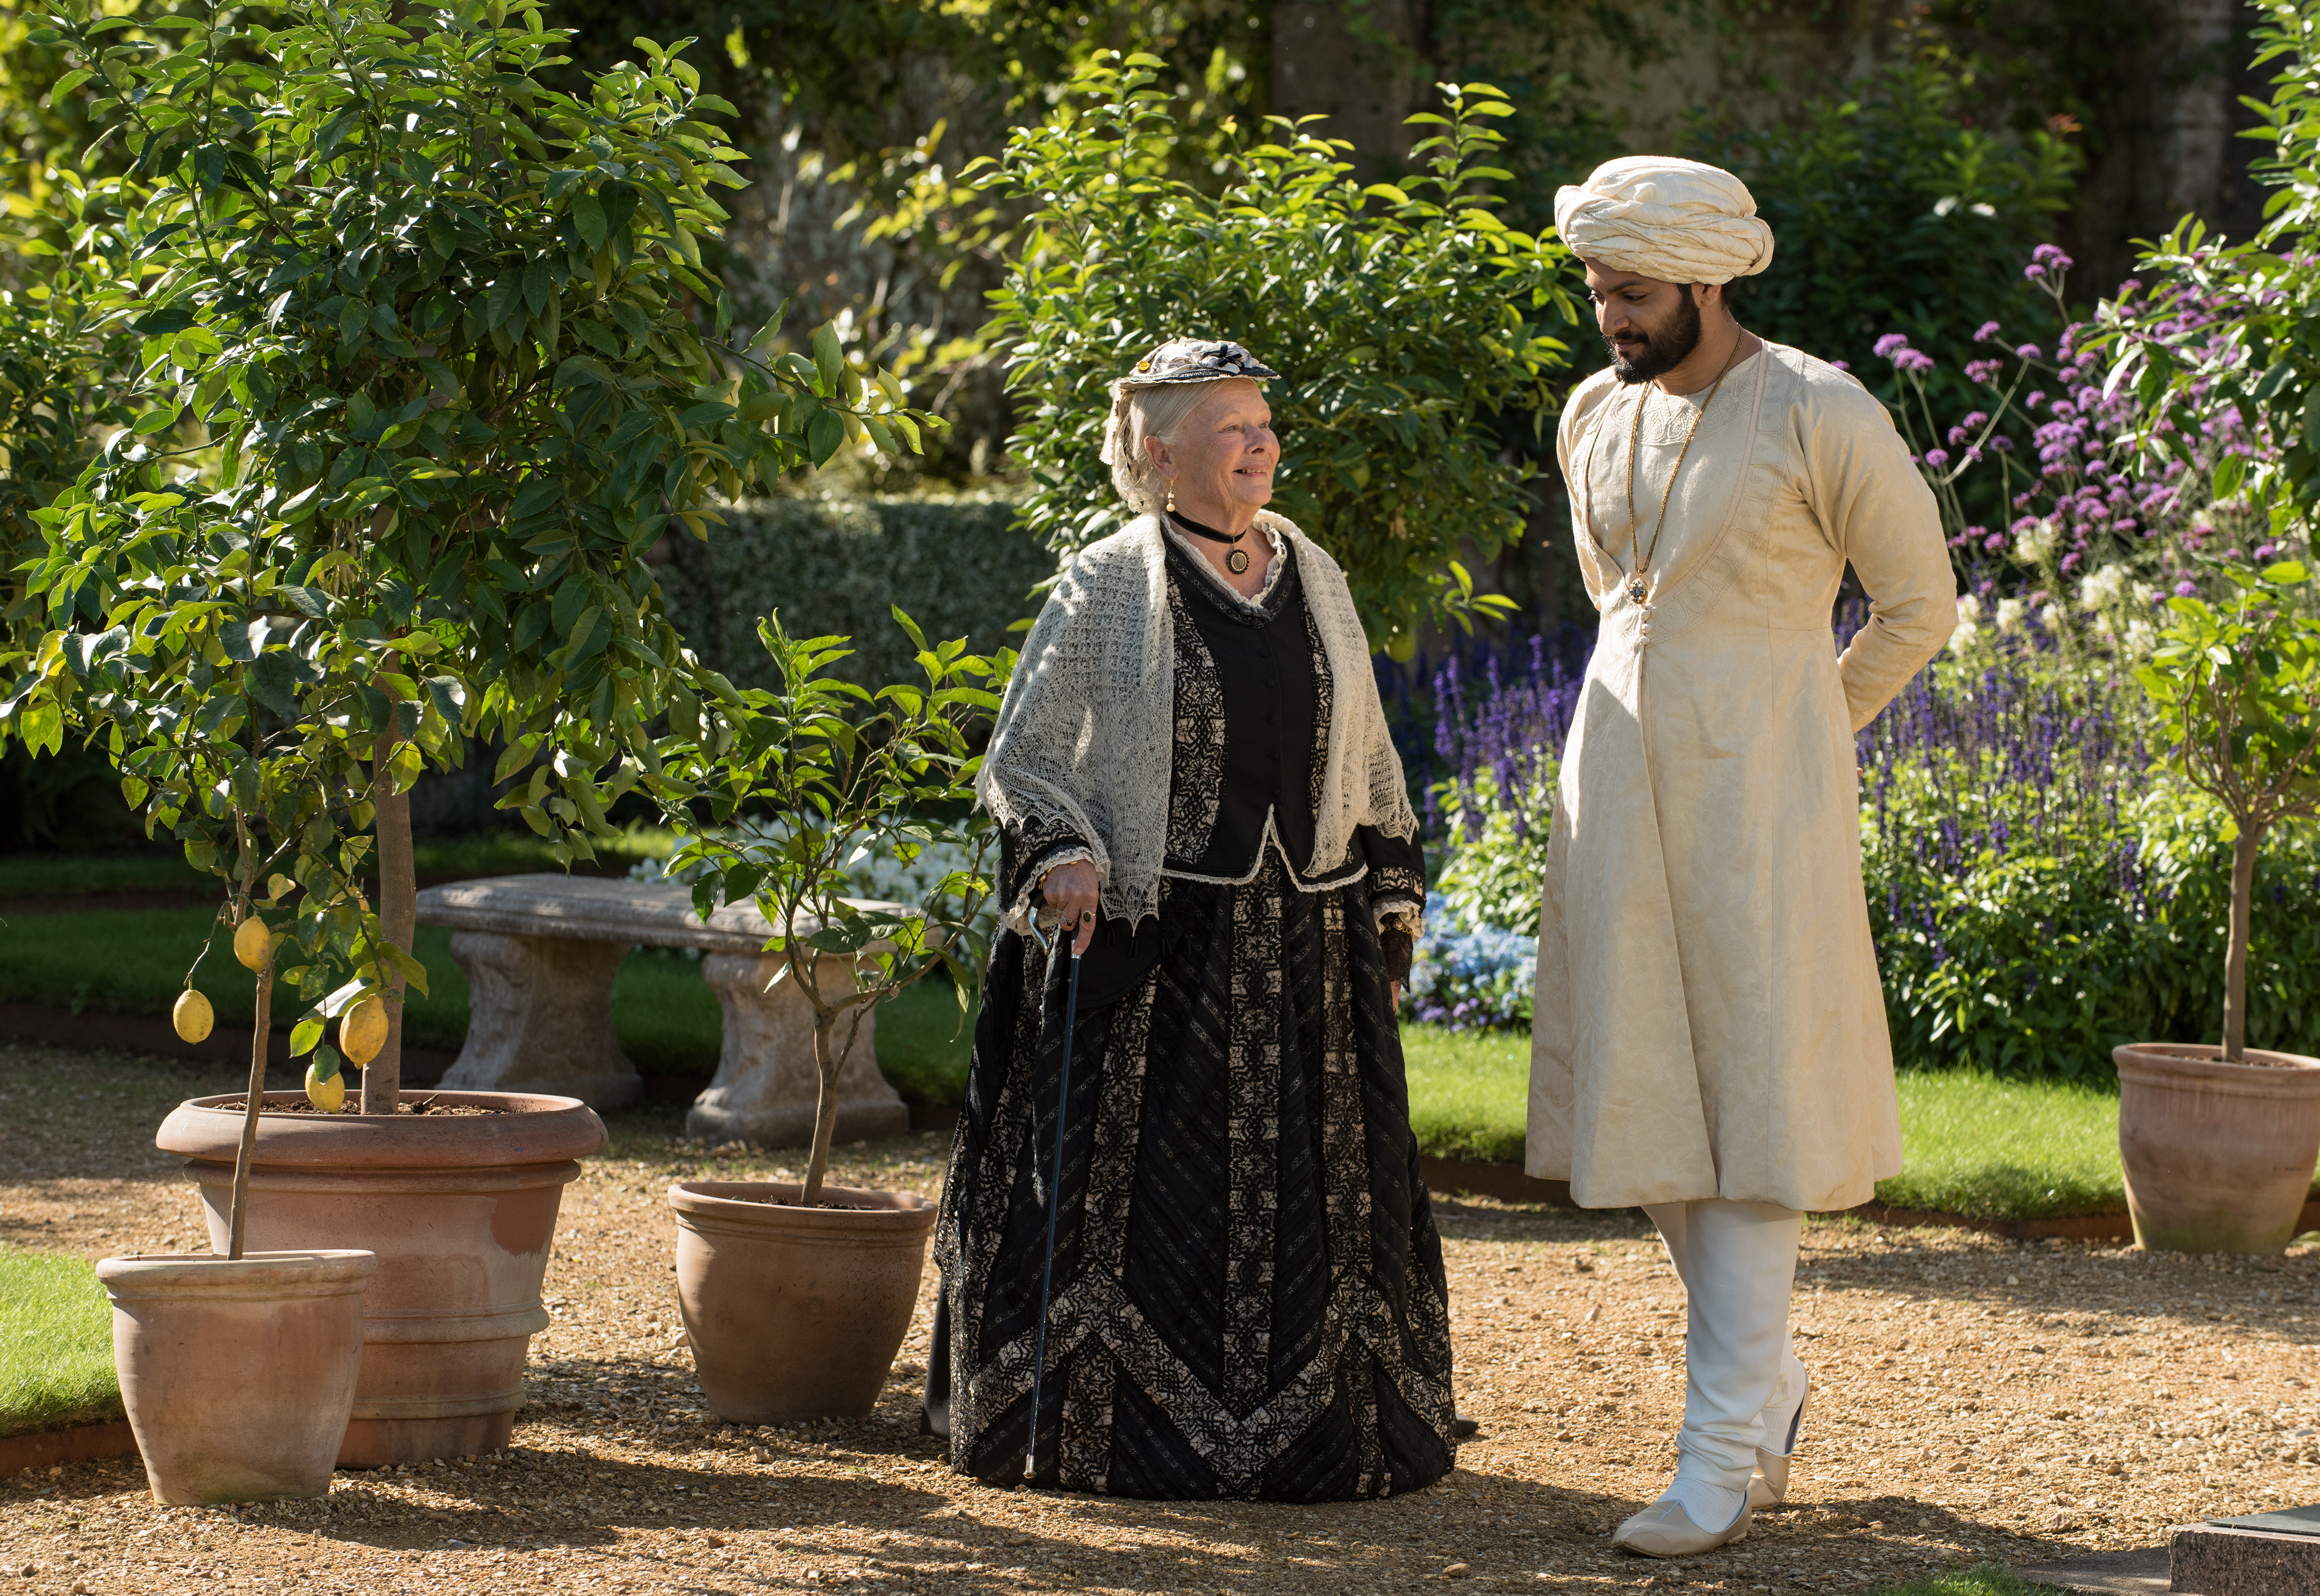 Judi Dench as Queen Victoria and Ali Fazal as Abdul Karim. (Peter Mountain—Focus Features)